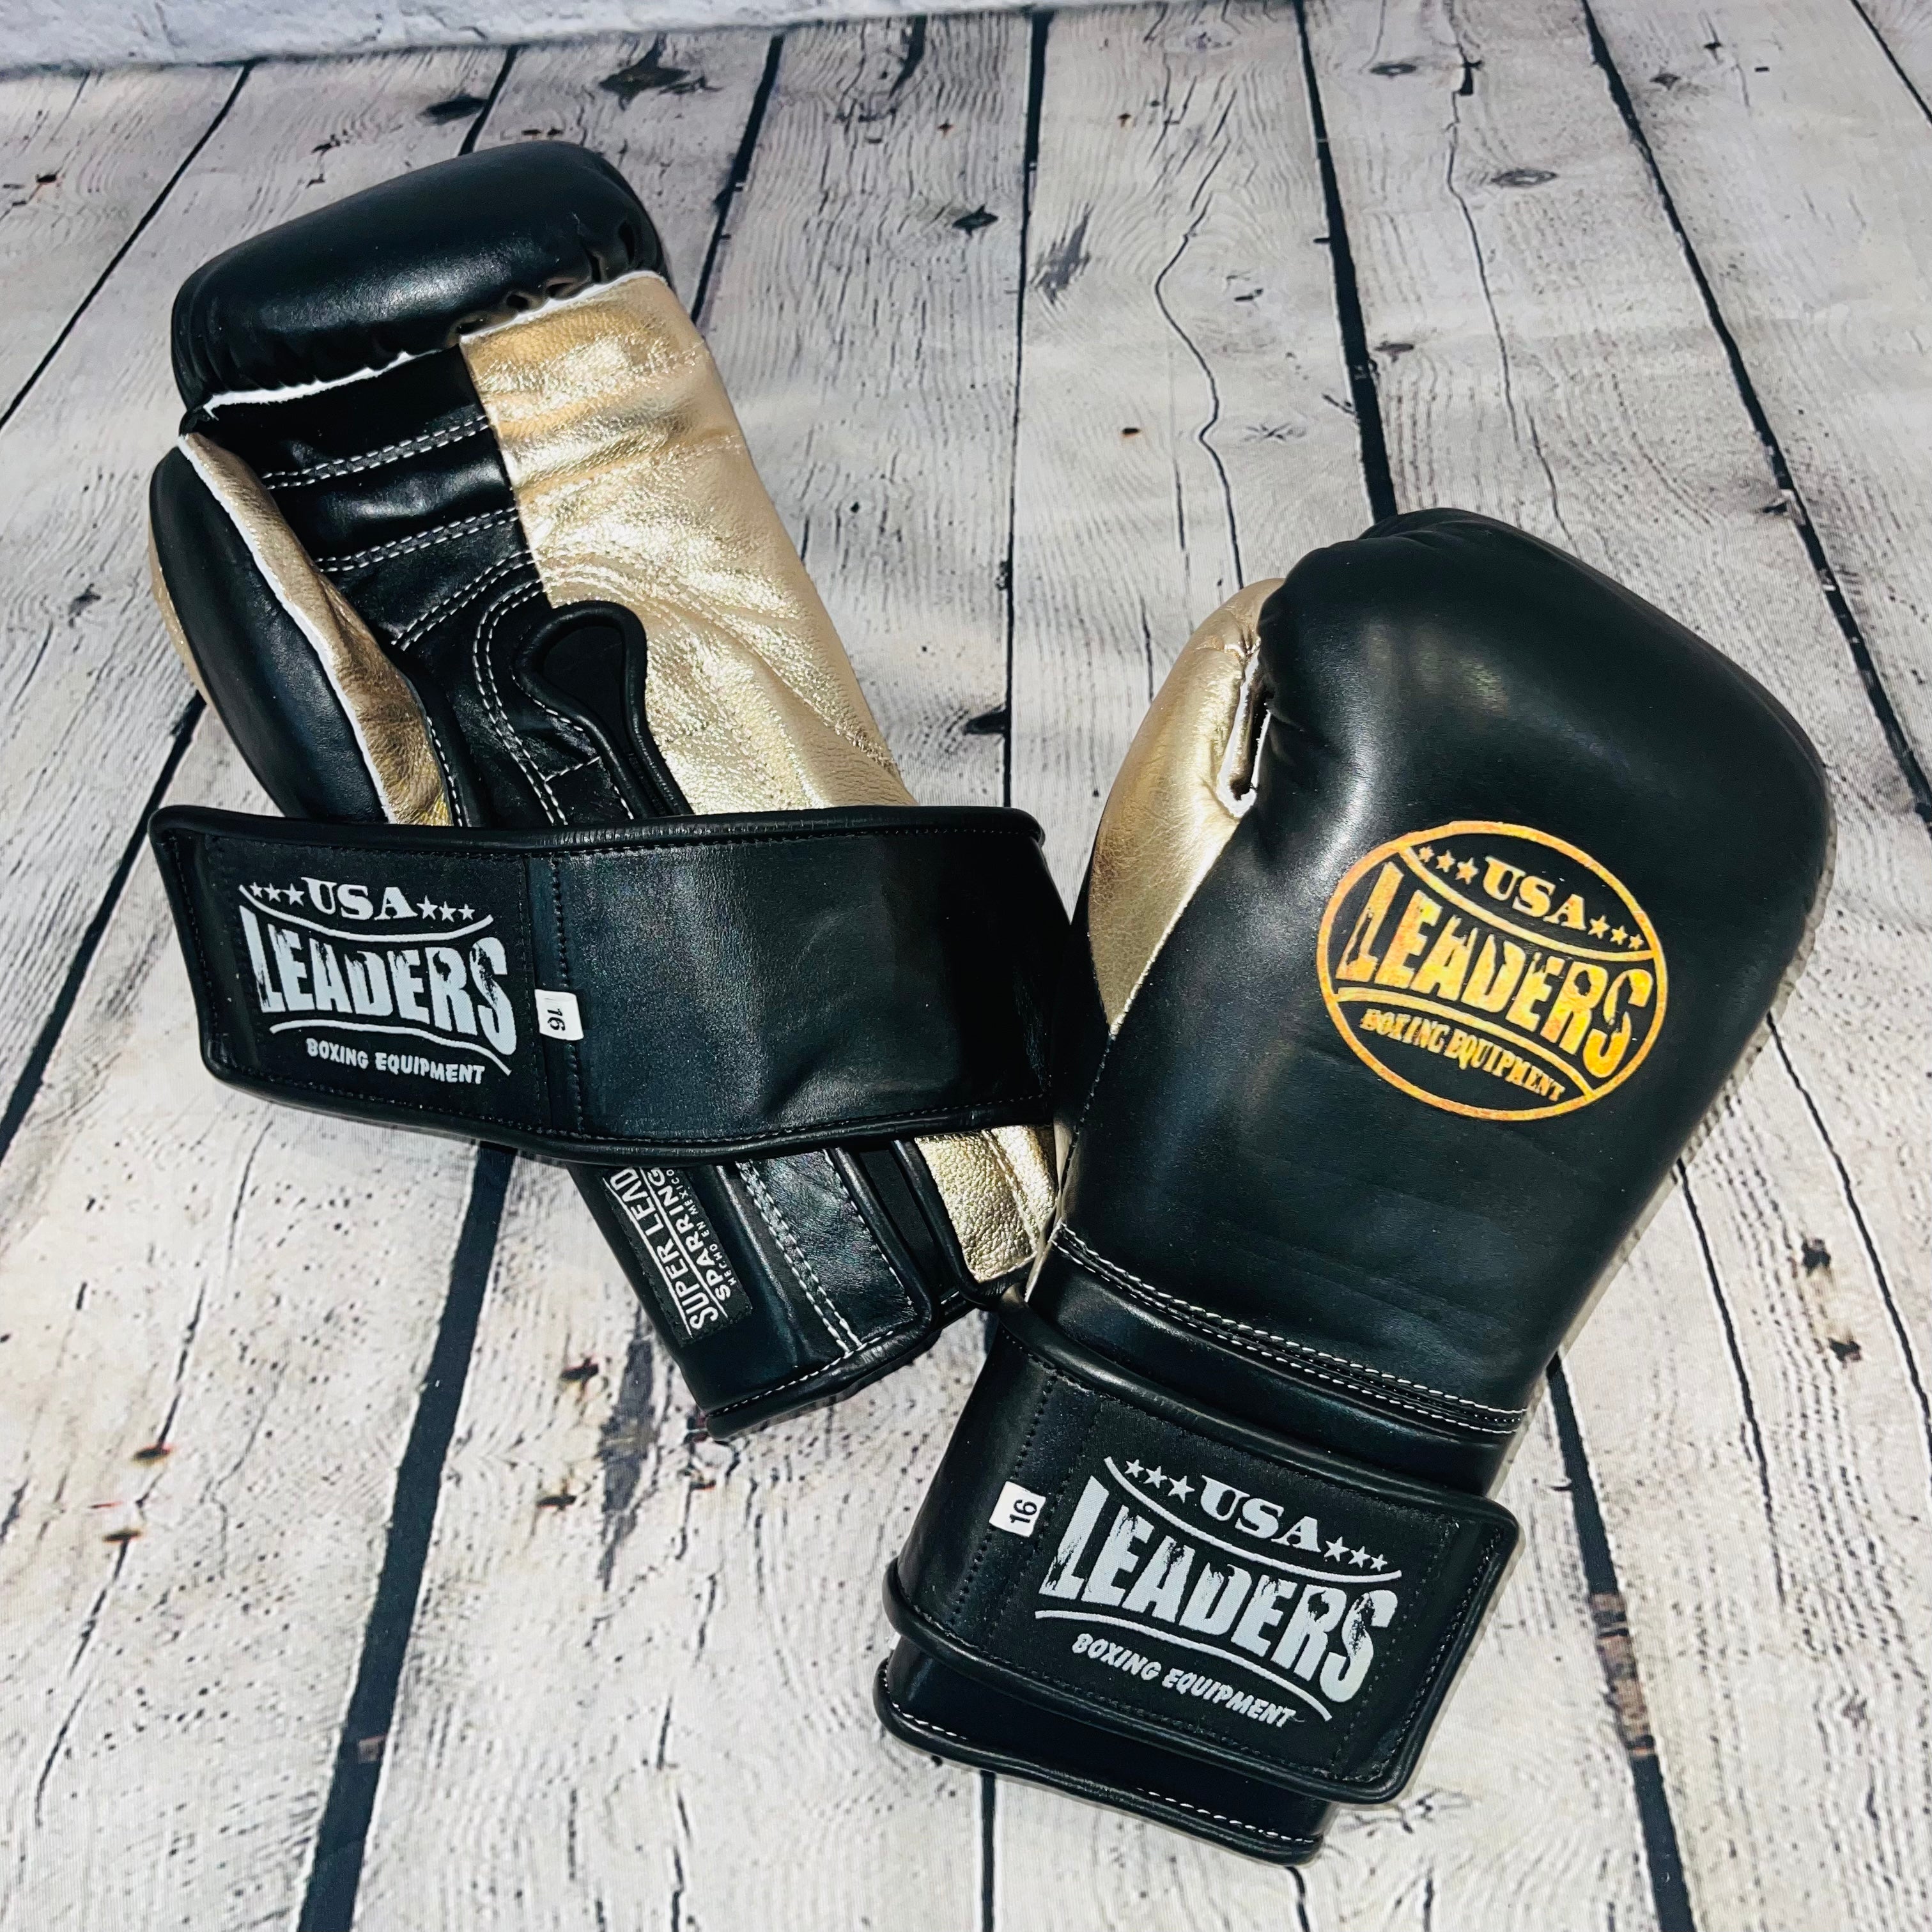 SuperLEAD Velcro Boxing Gloves (Black/Gold)